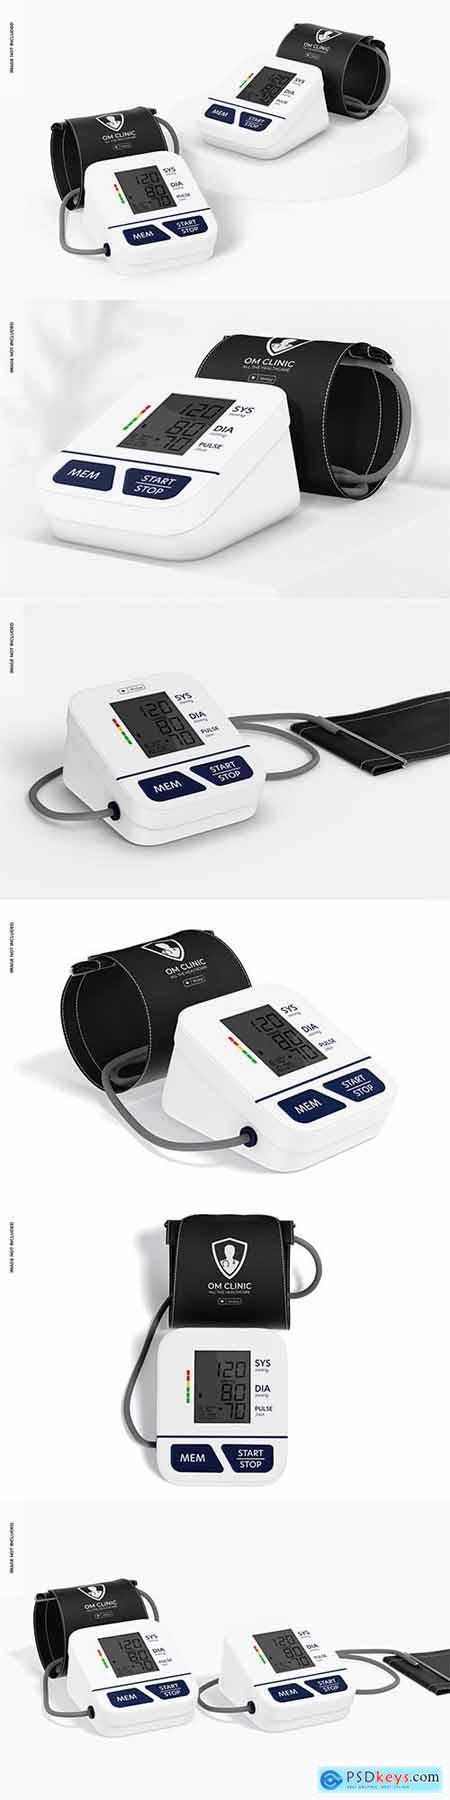 Digital blood pressure monitor mockup